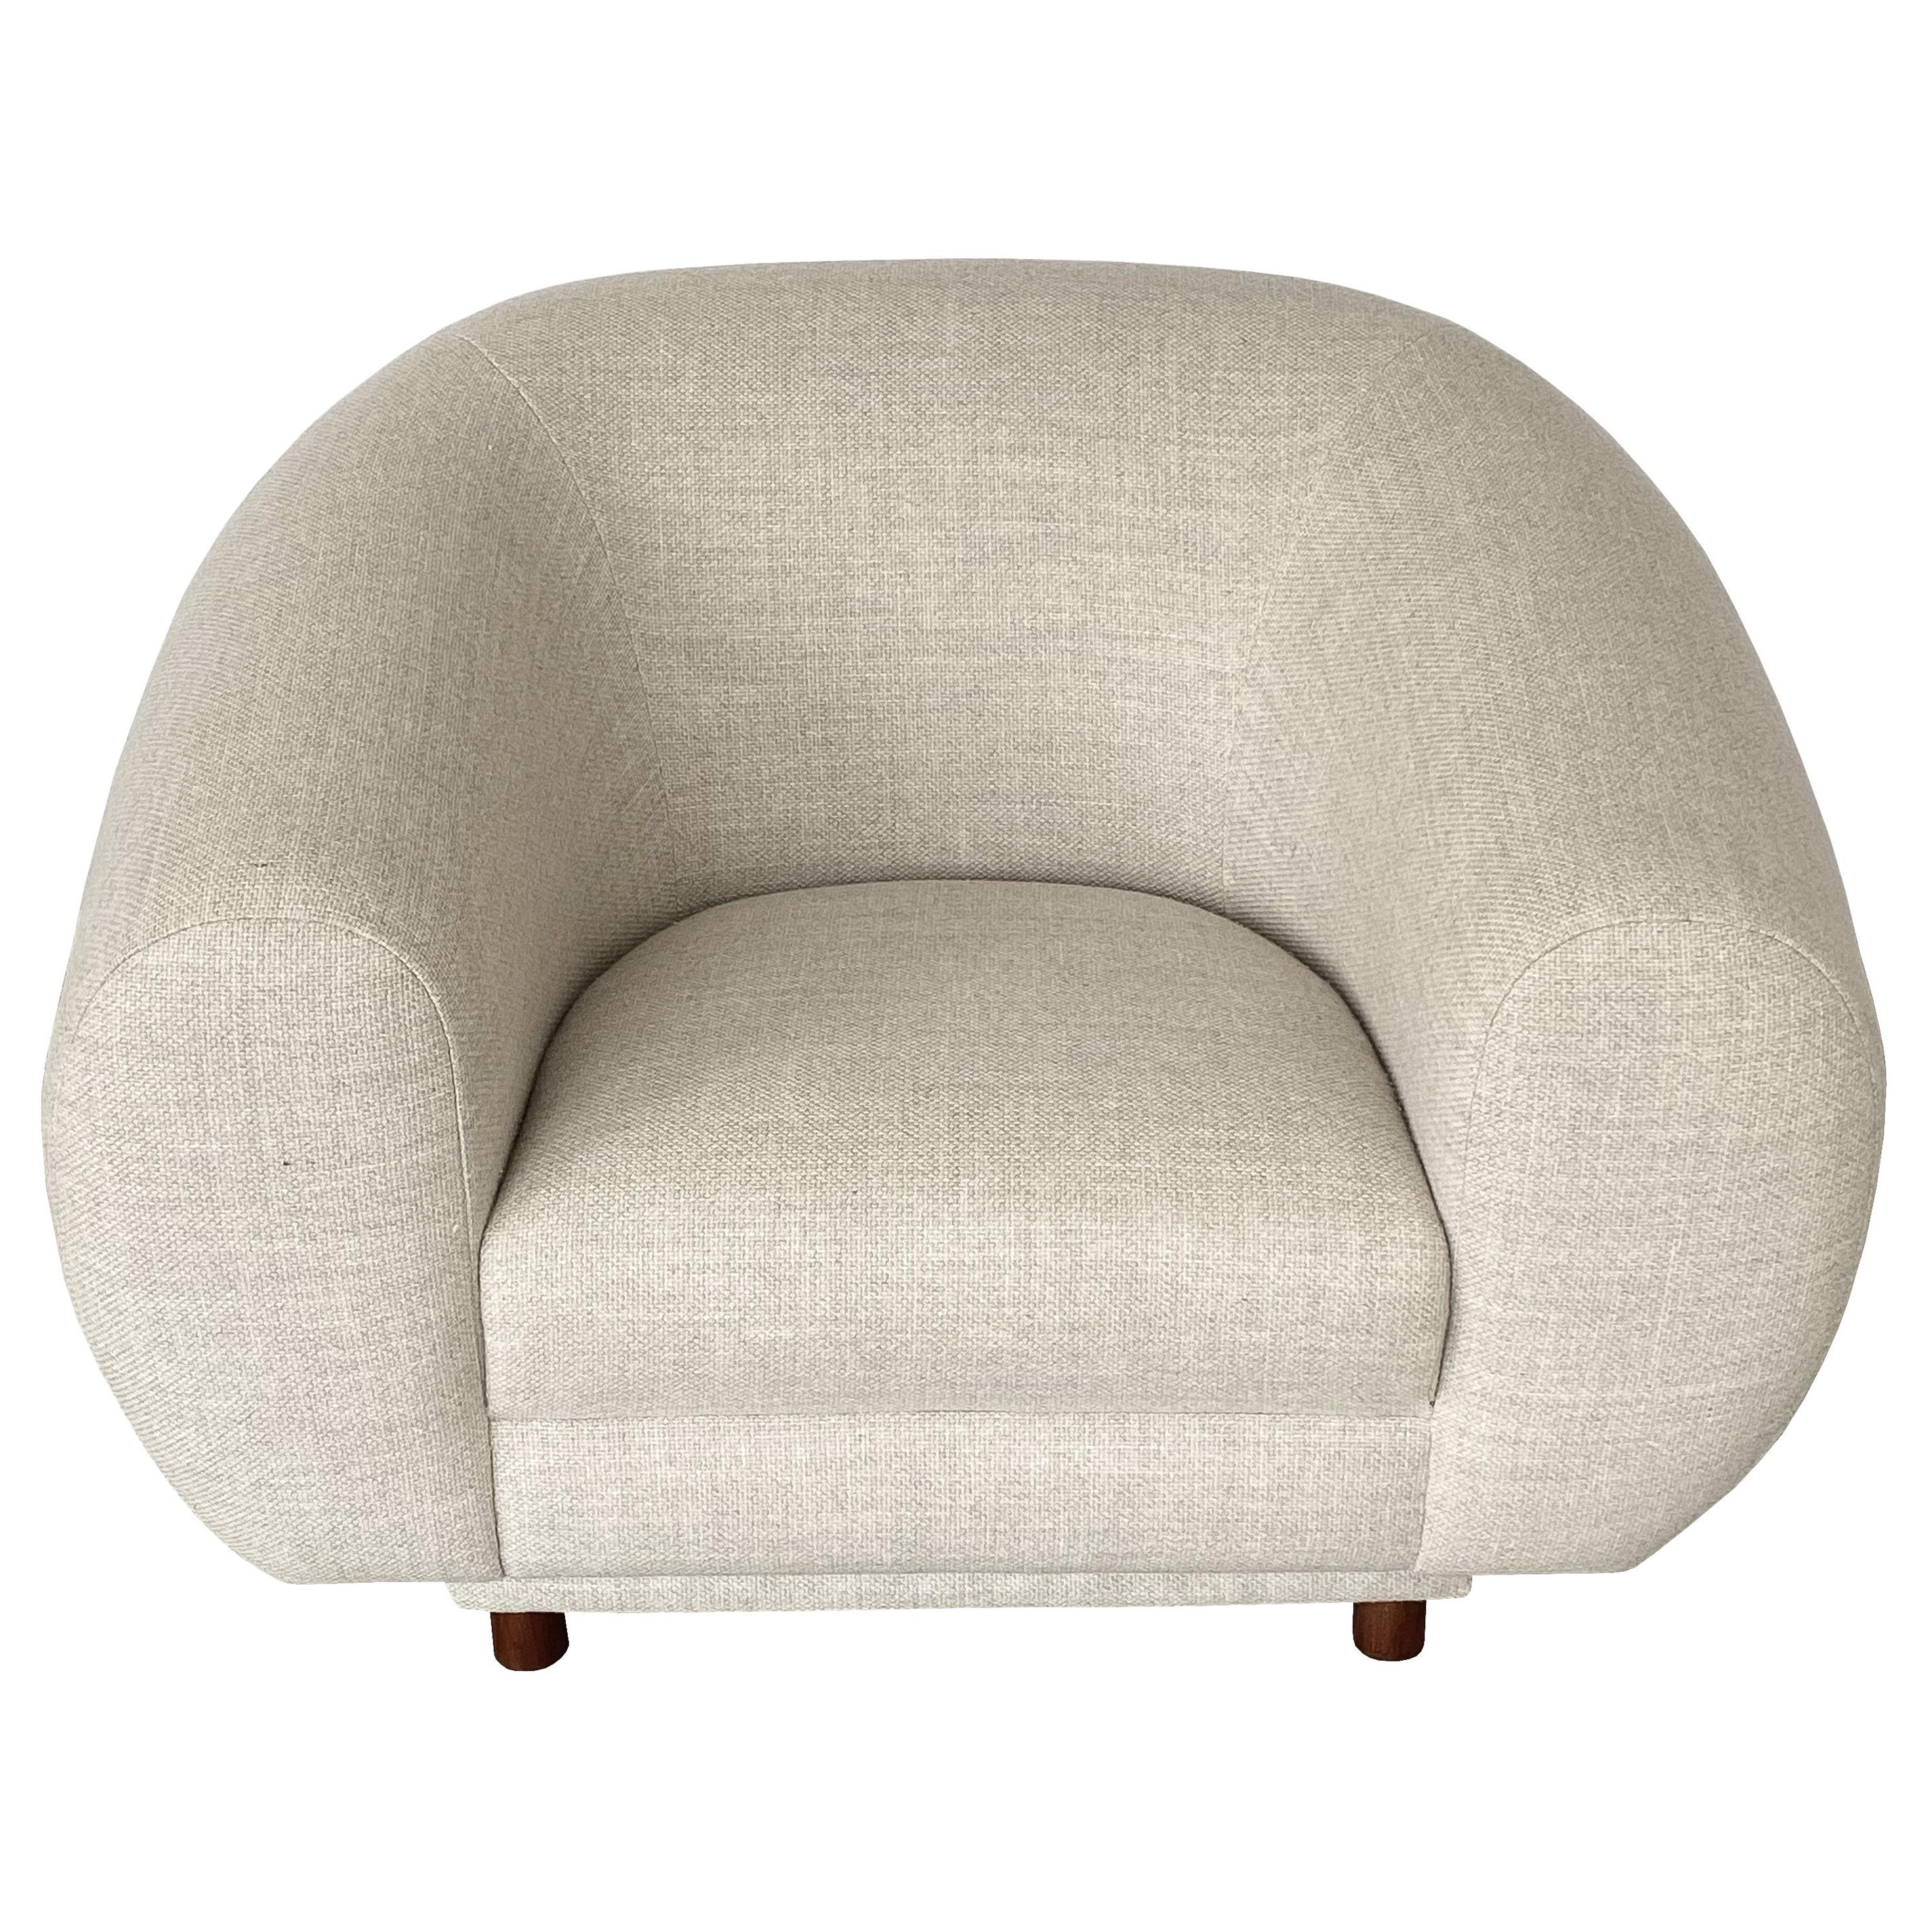 Overstuffed Polar Bear Style Lounge Chair